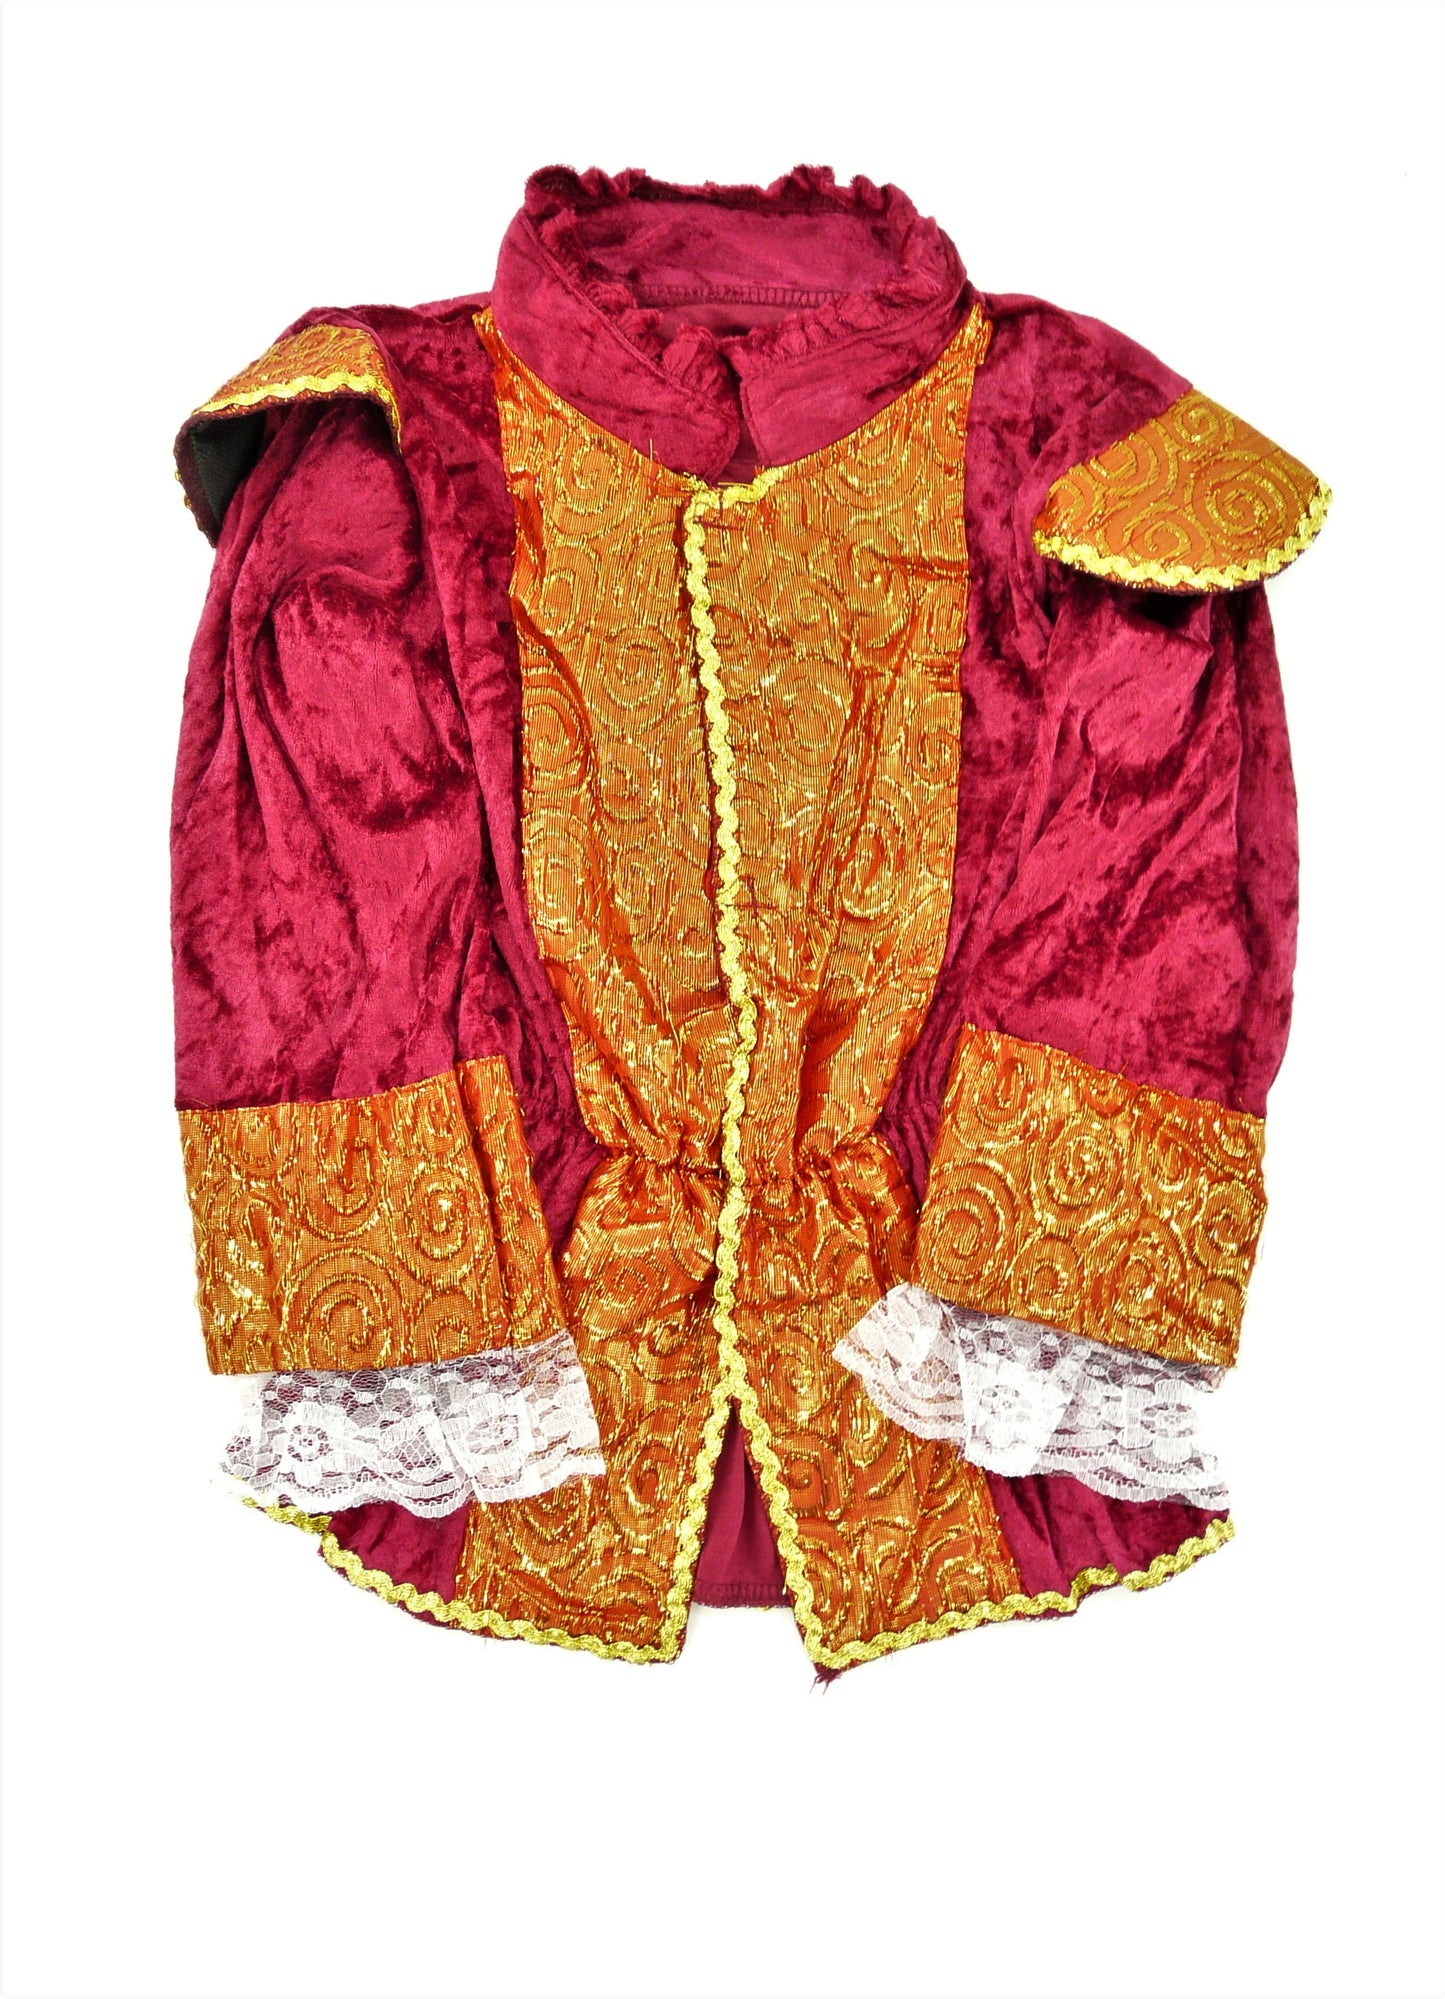 Tudor Boy Children's Fancy Dress Costume Age 4-6